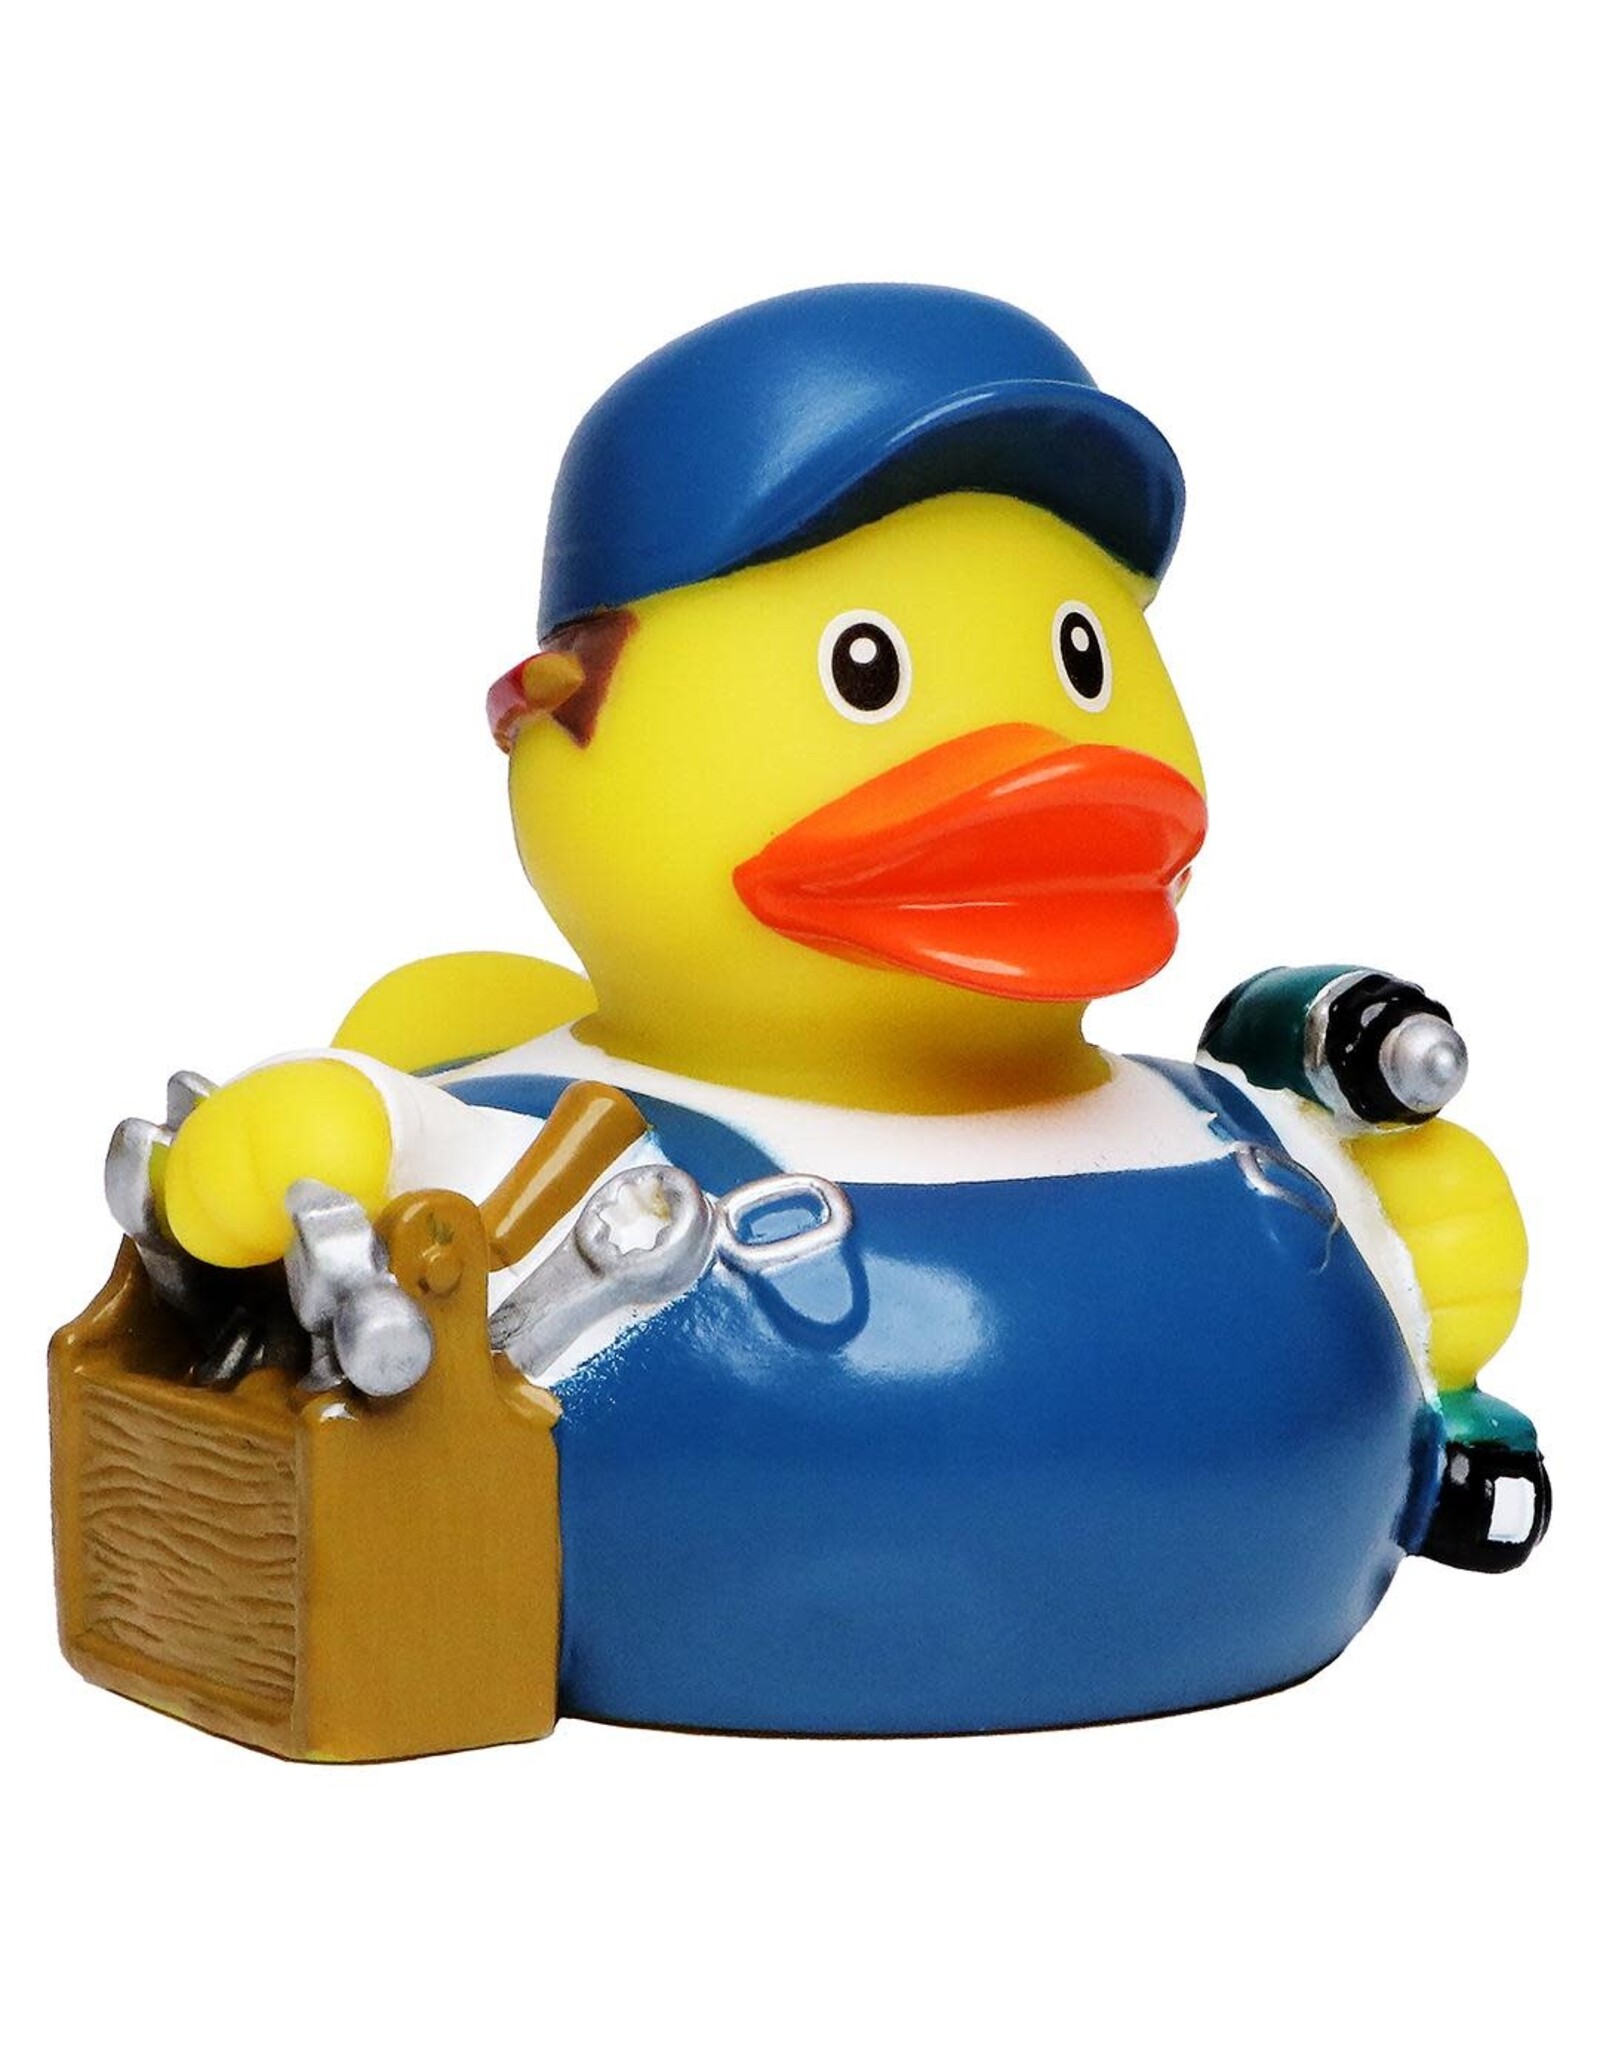 Repairman Rubber Duck